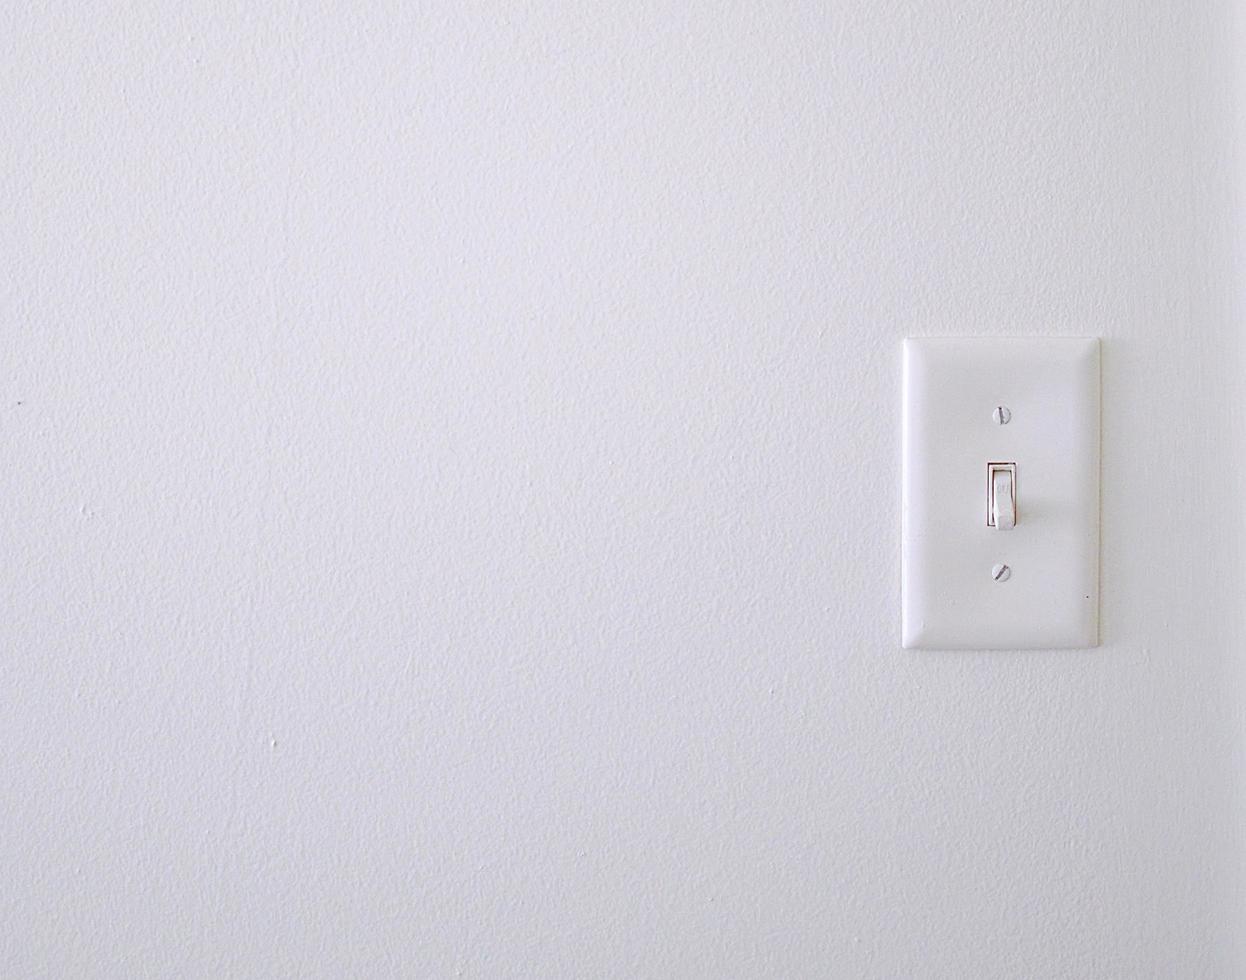 parede branca com interruptor de luz foto